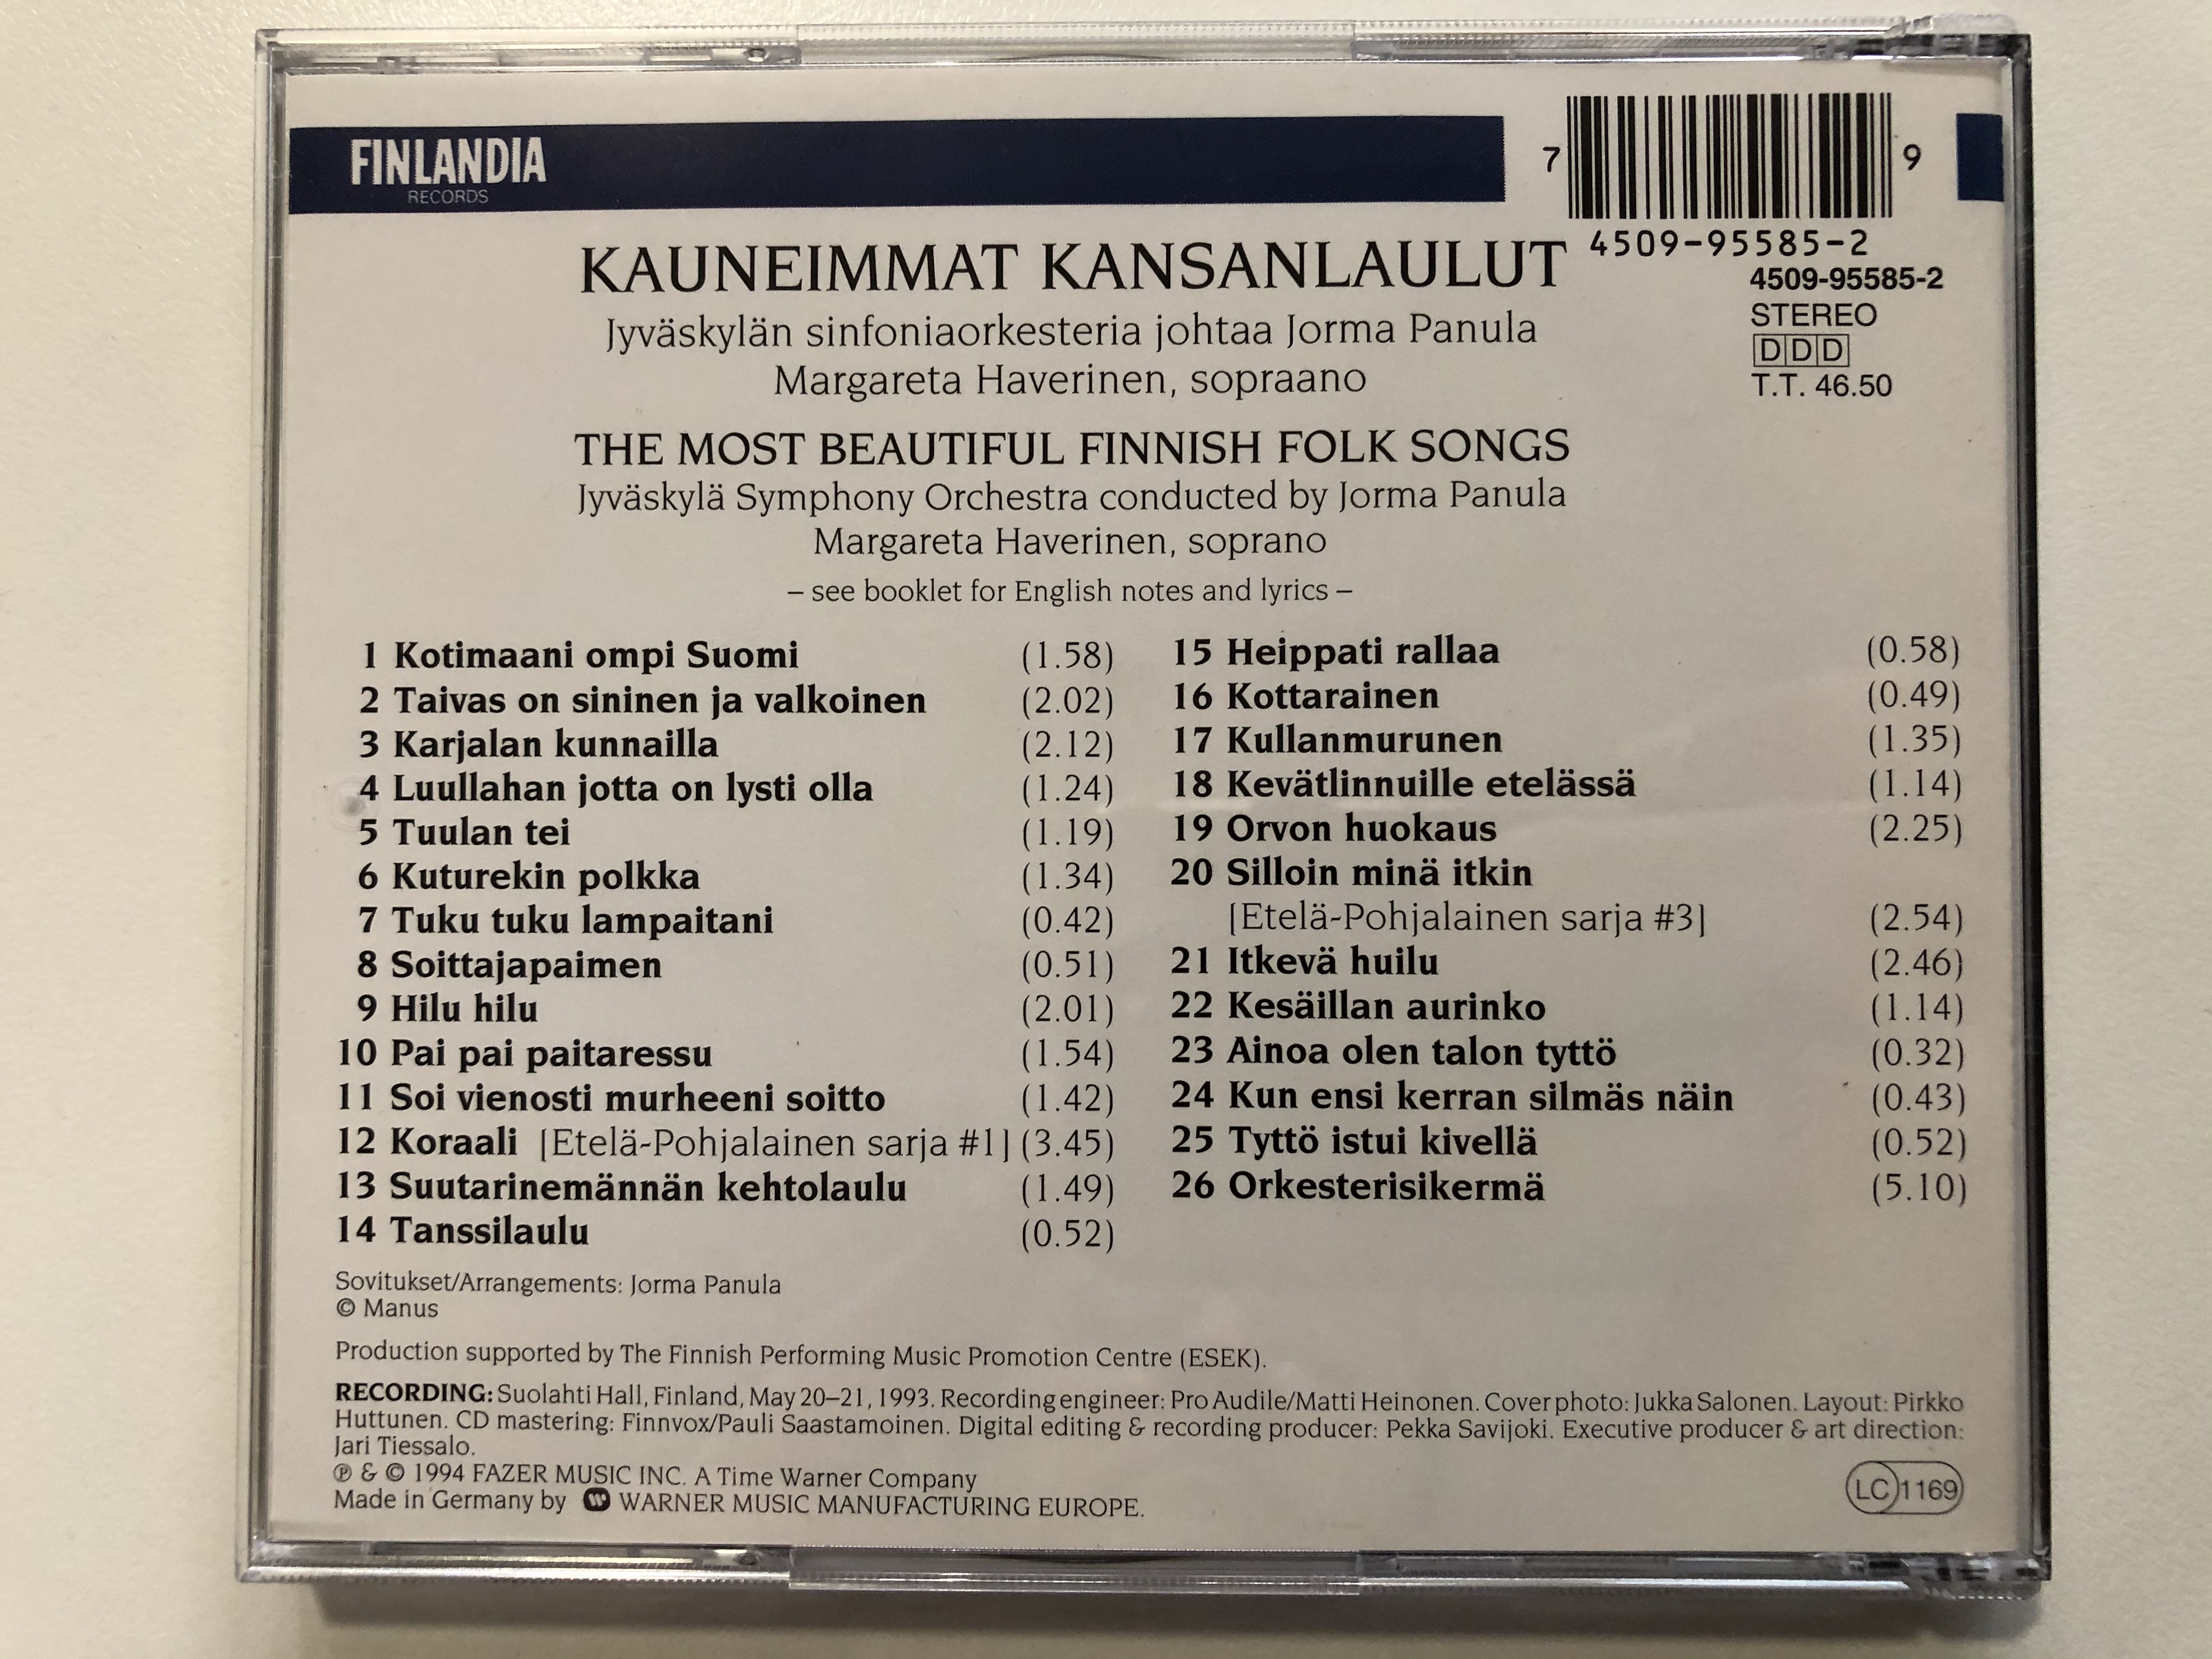 kauneimmat-kansanlaulut-the-most-beautiful-finnish-folk-songs-margareta-haverinen-soprano-jyv-skyl-symphony-orchestra-jorma-panula-finlandia-records-audio-cd-1994-stereo-4509-955-4-.jpg